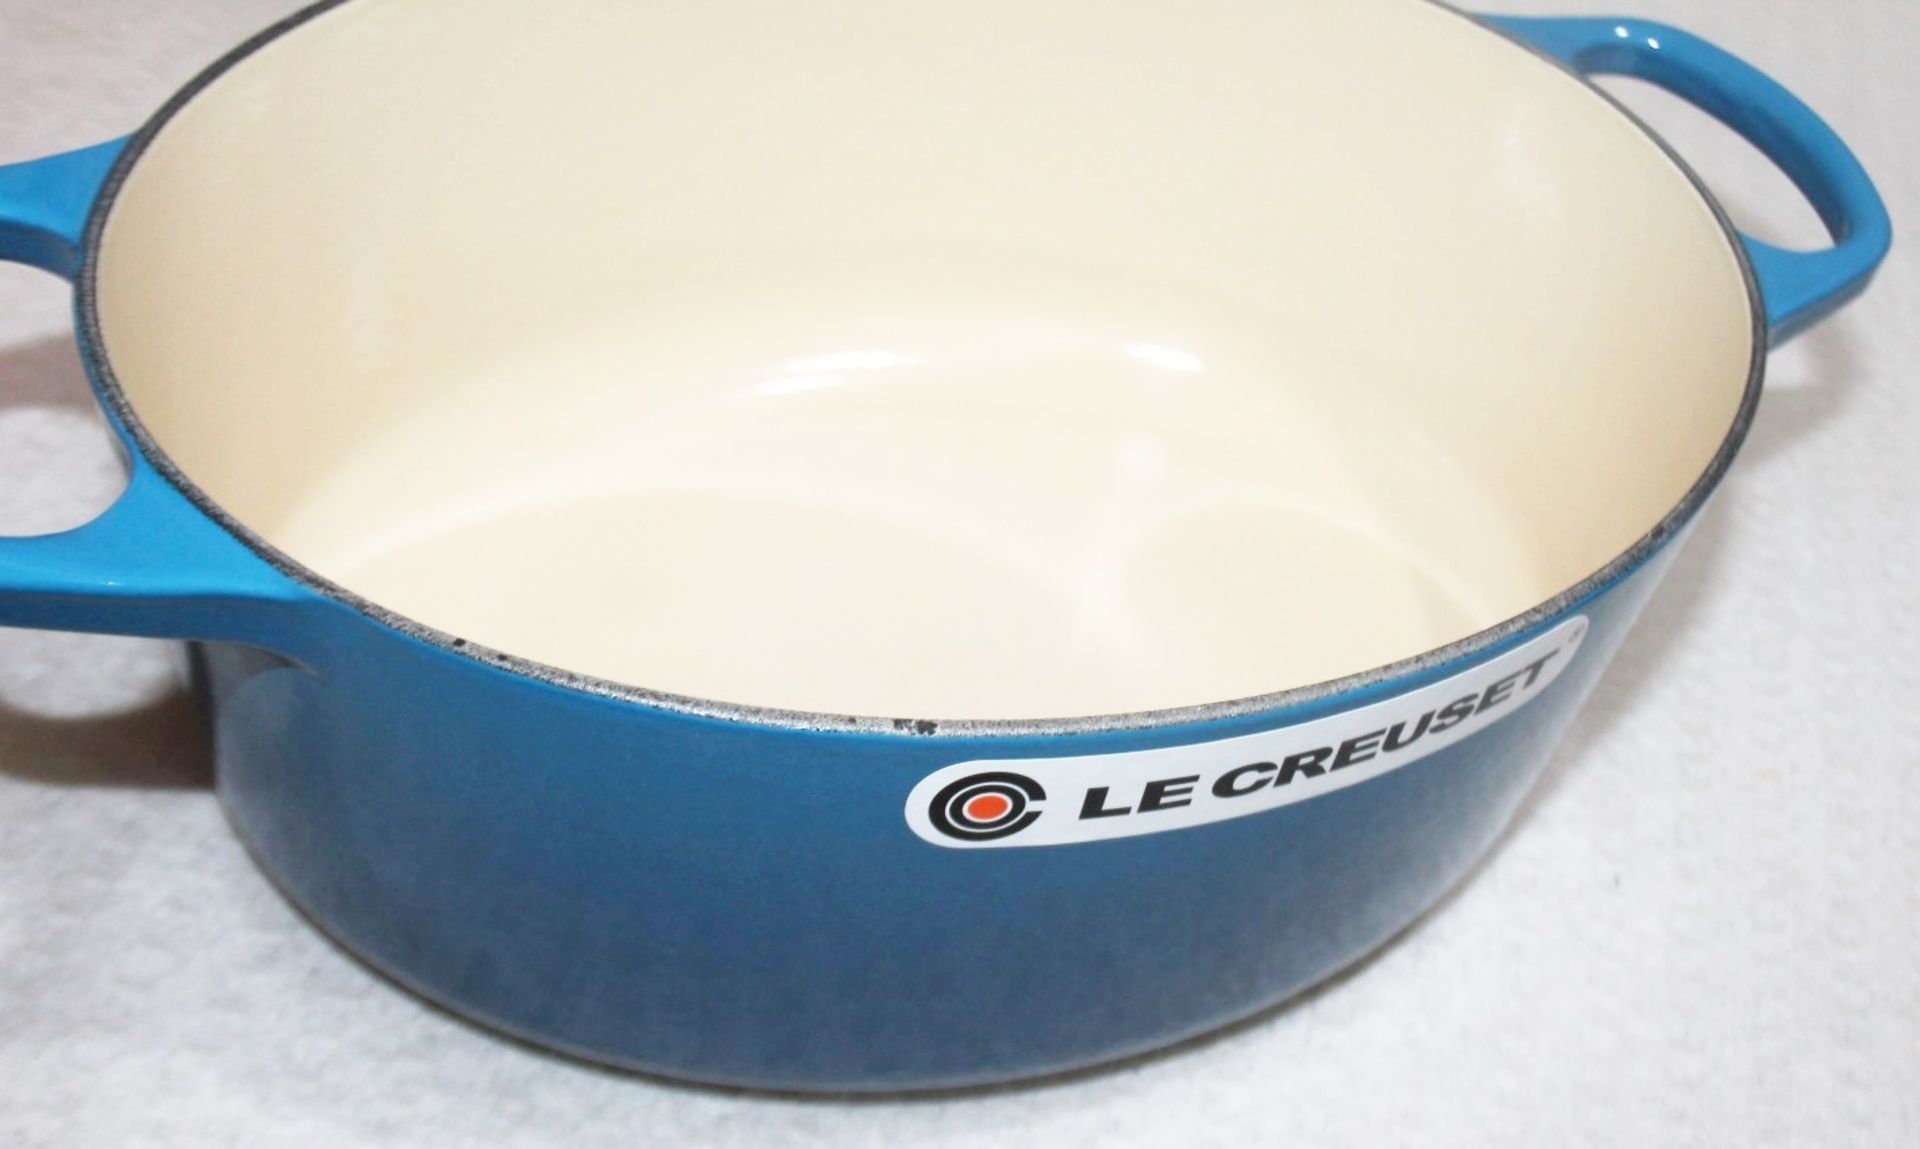 1 x LE CREUSET 'Signature' Enamelled Cast Iron 29cm Oval Casserole Dish In Blue - RRP £295.00 - Image 7 of 9